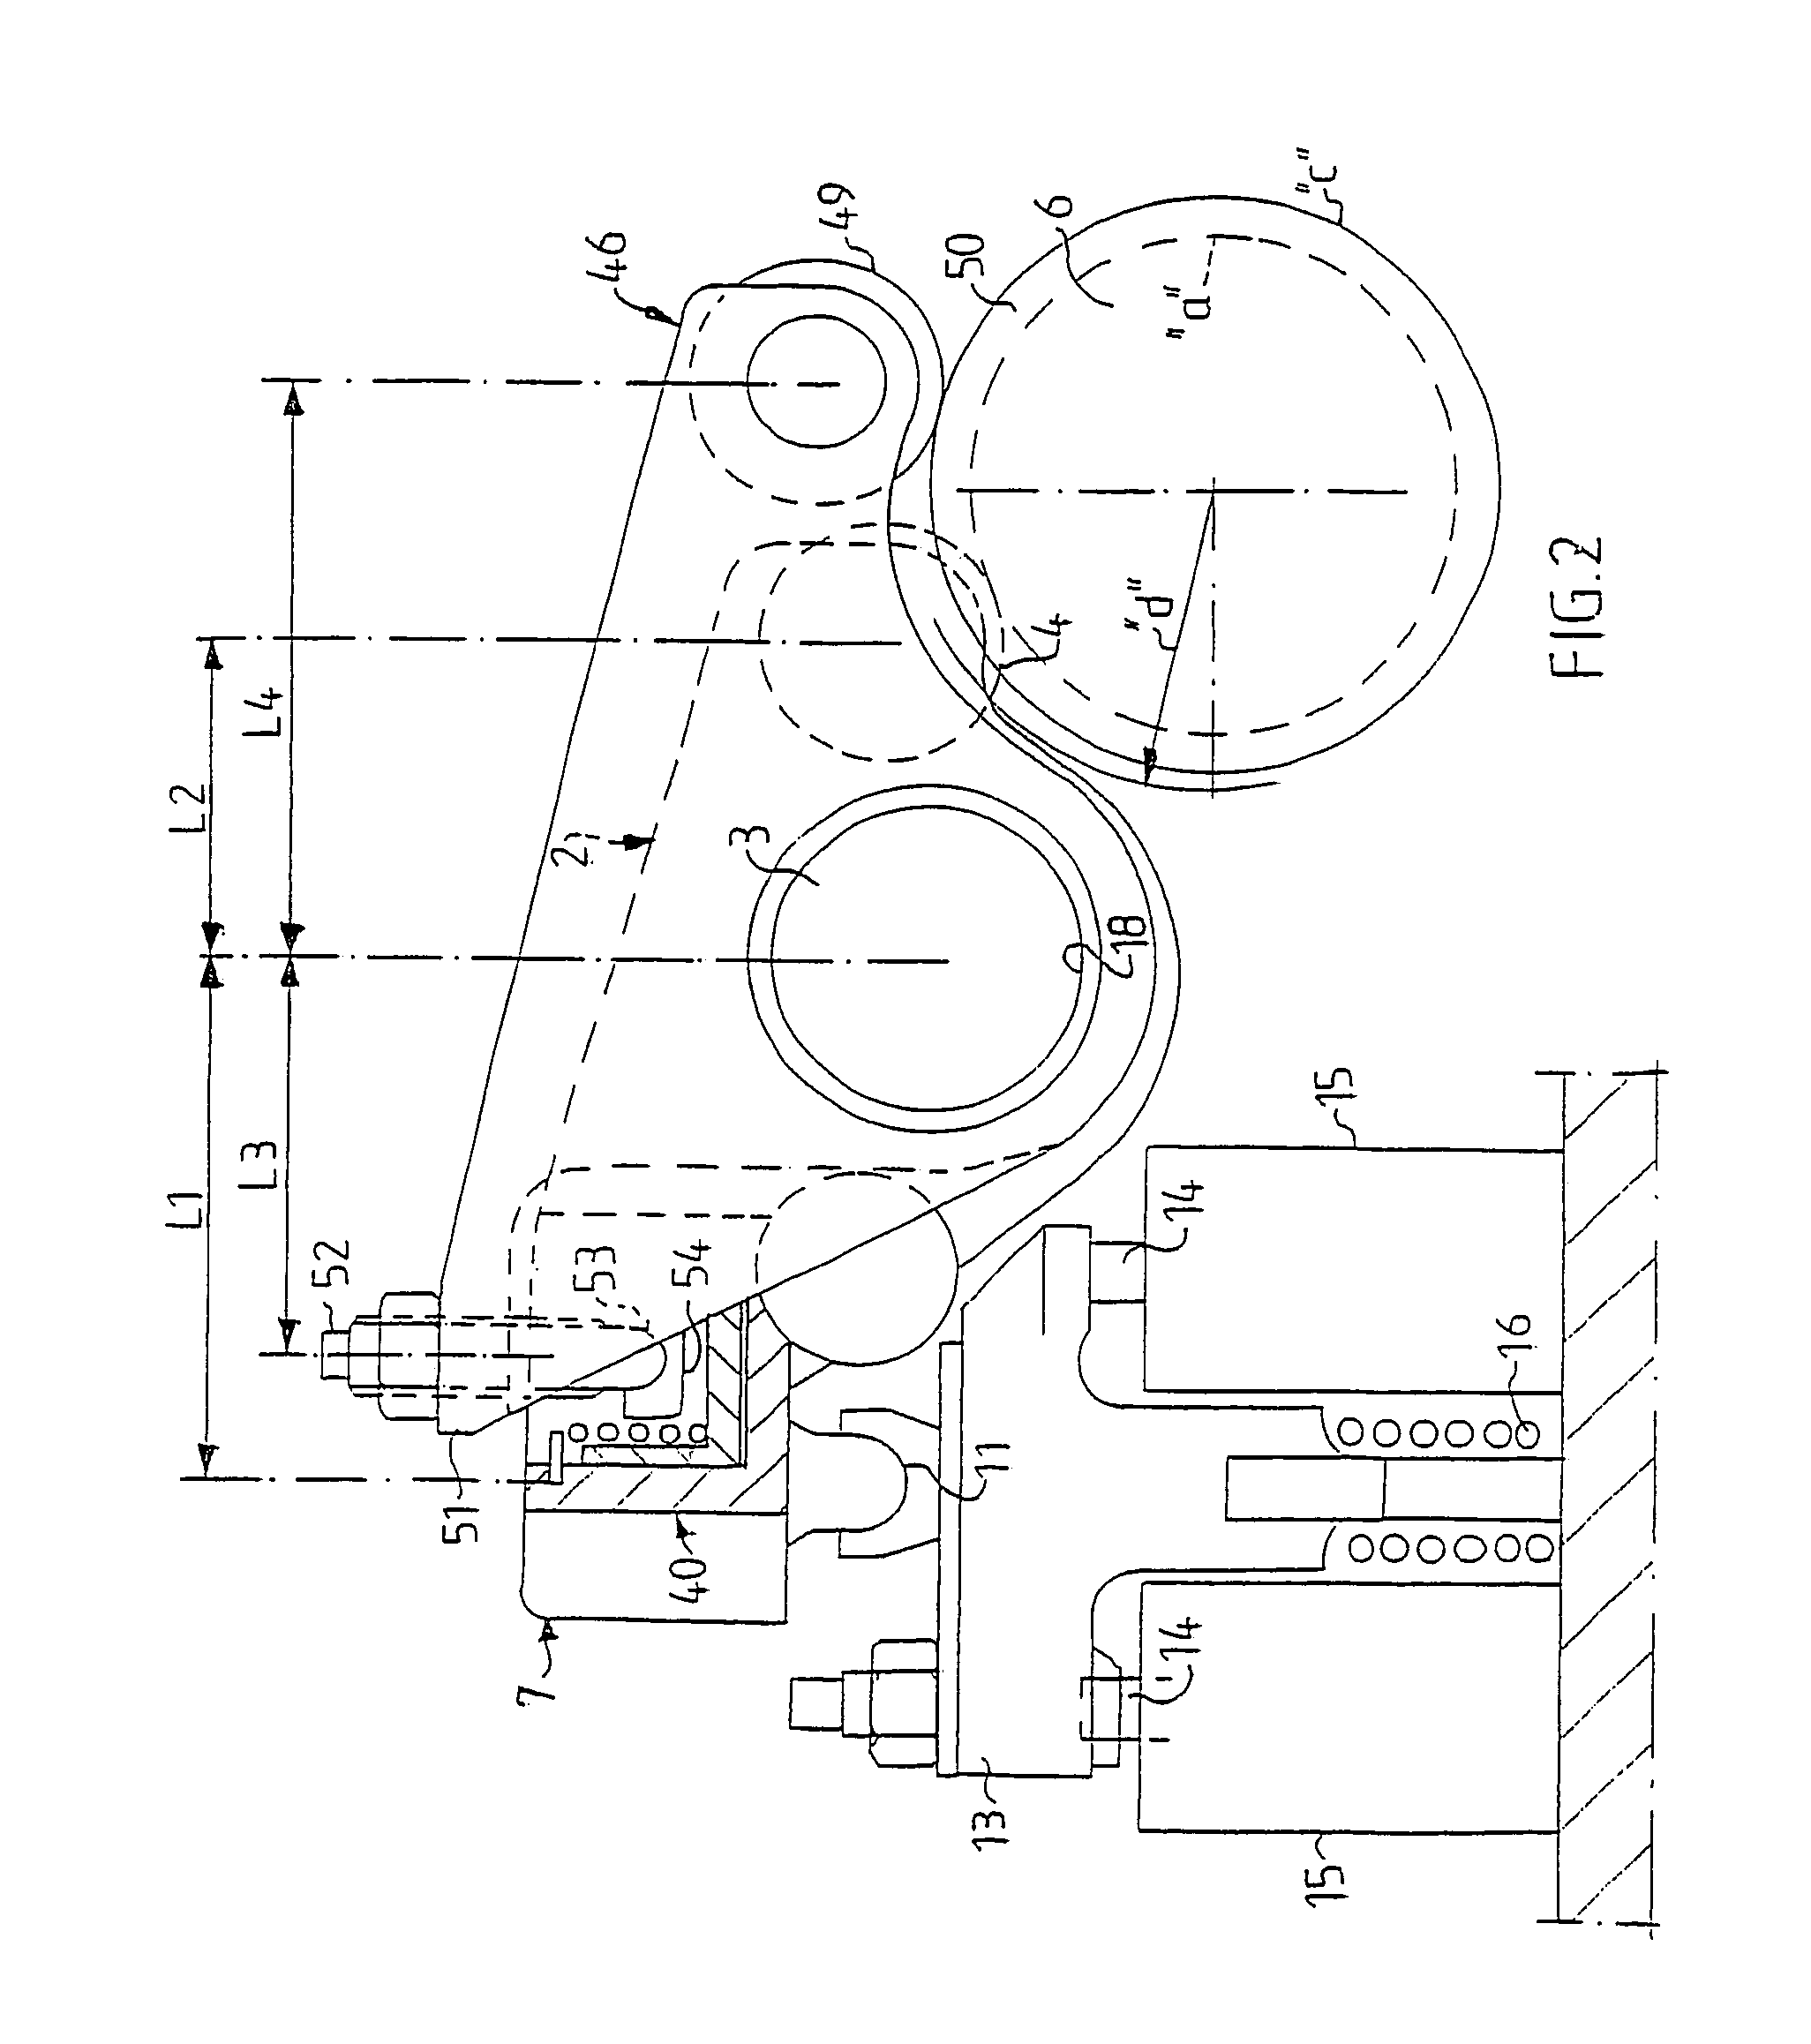 Exhaust valve mechanism in internal combustion engines